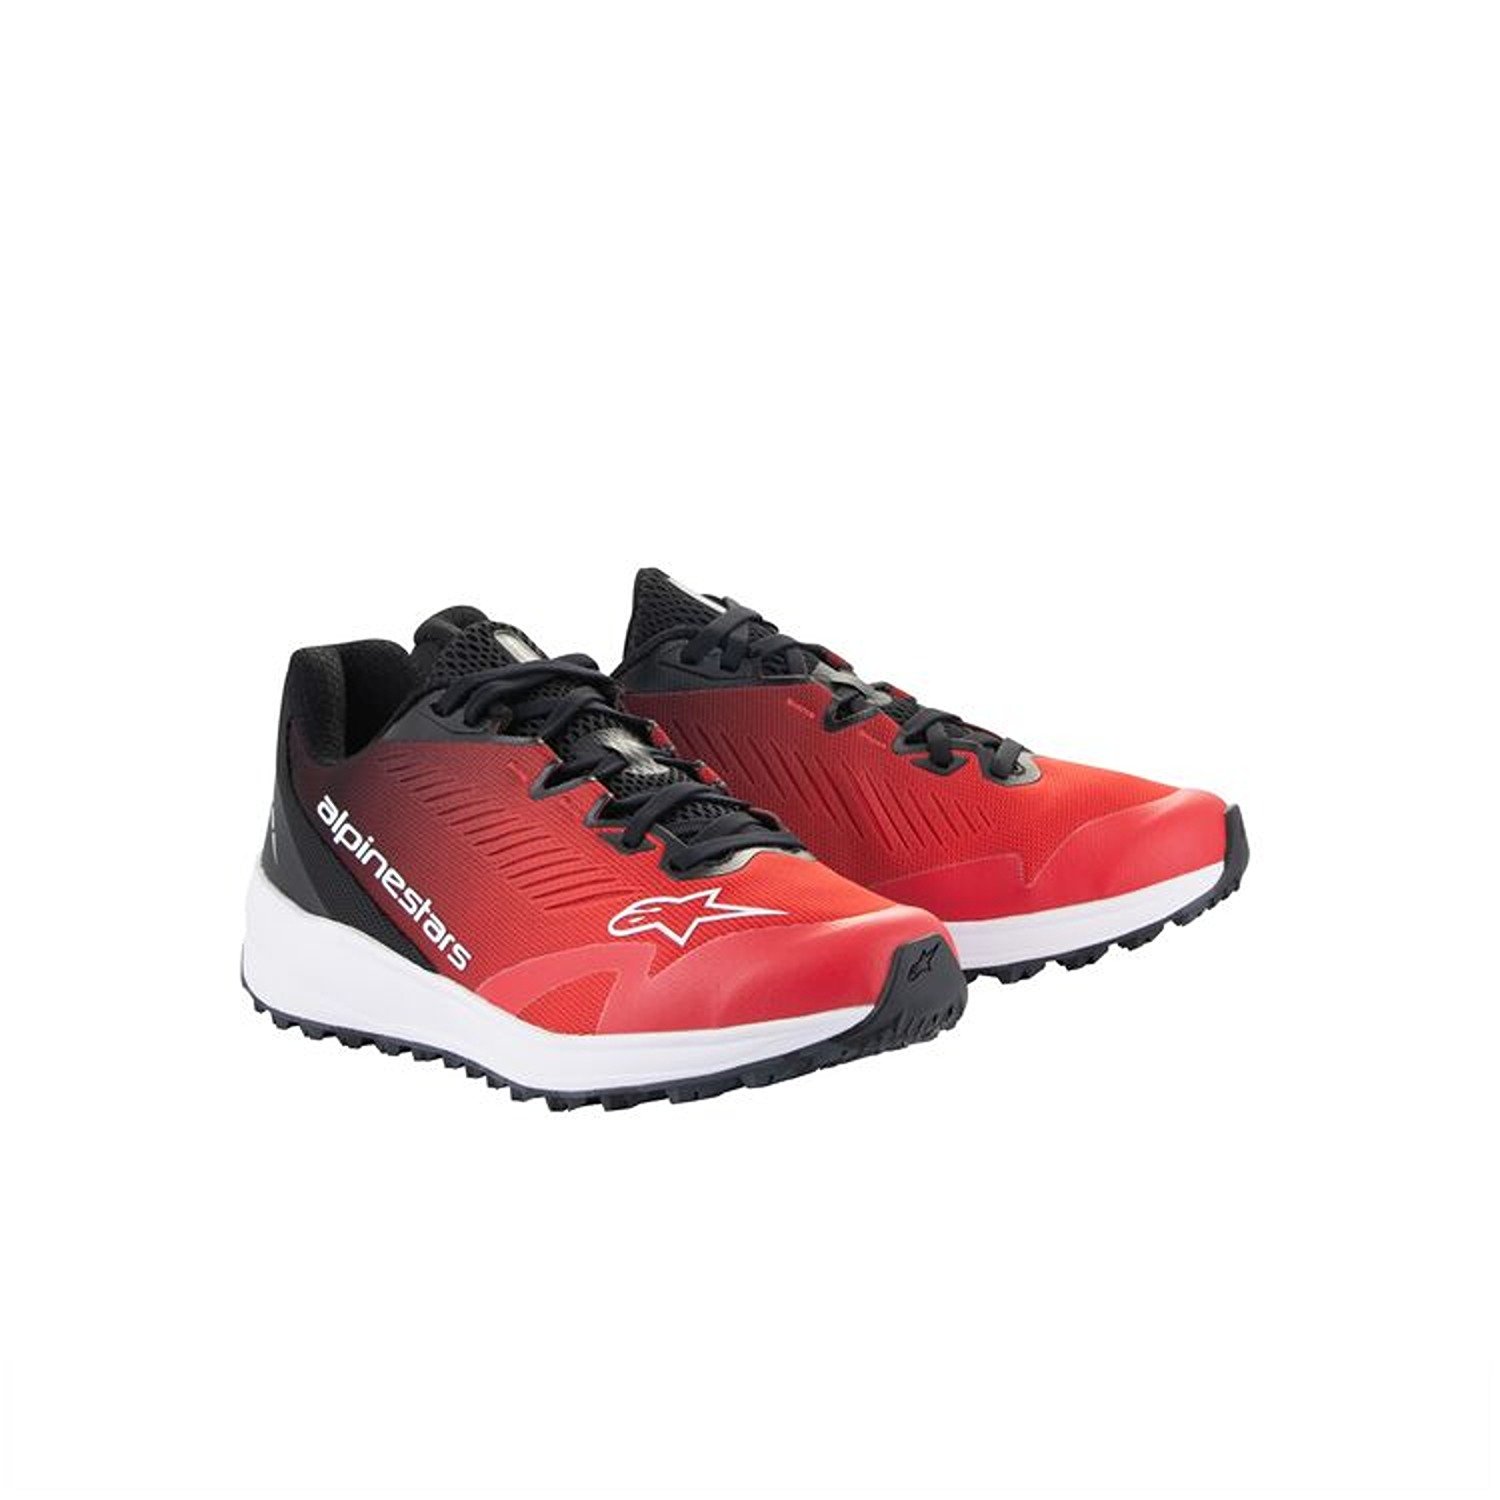 Image of Alpinestars Meta Road V2 Shoes Red Black White Size US 55 EN